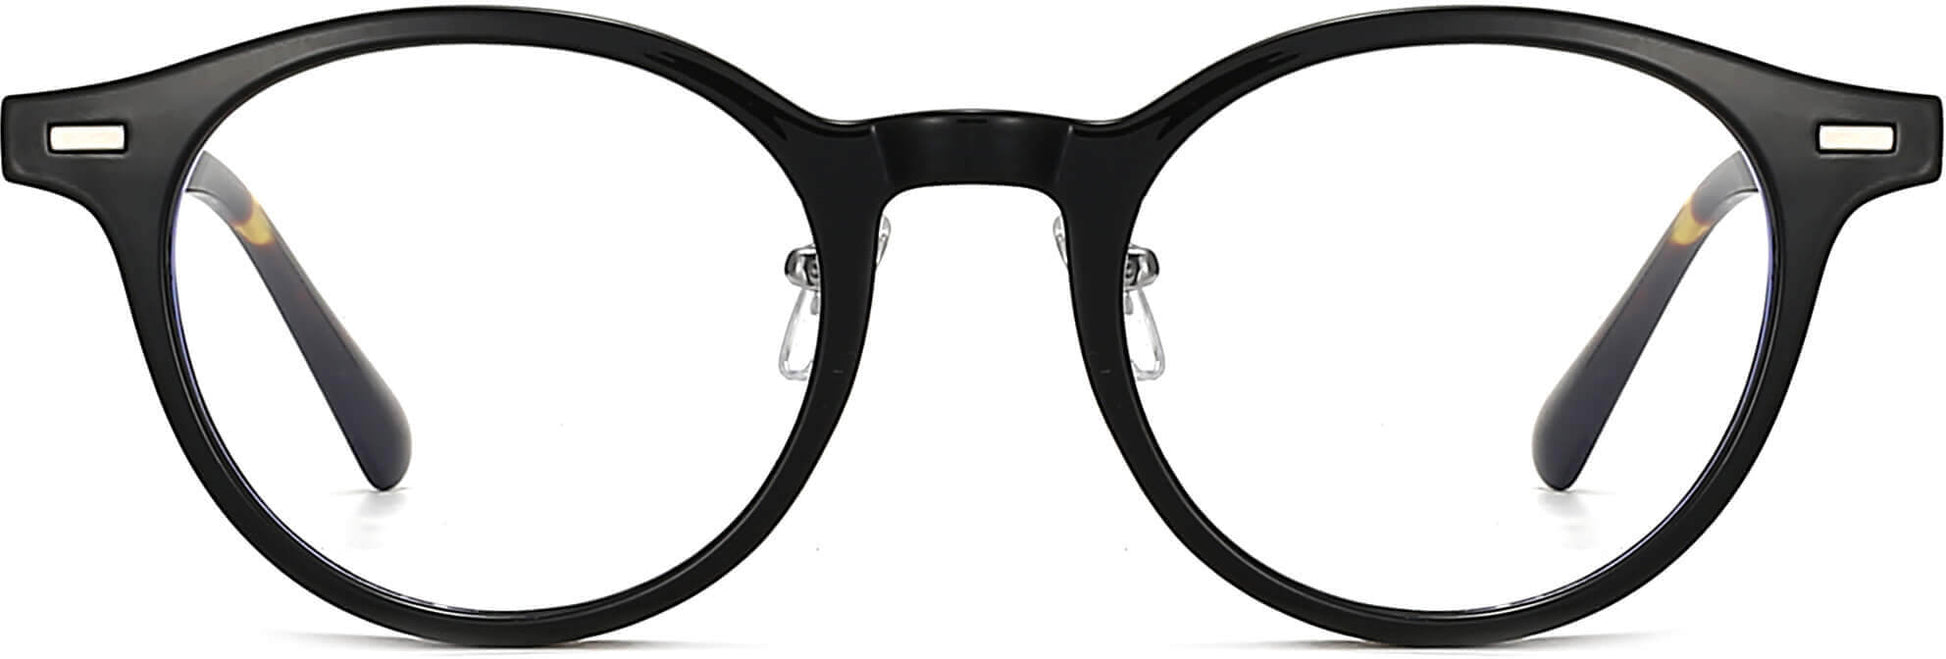 Nova Round Black Eyeglasses from ANRRI, front view